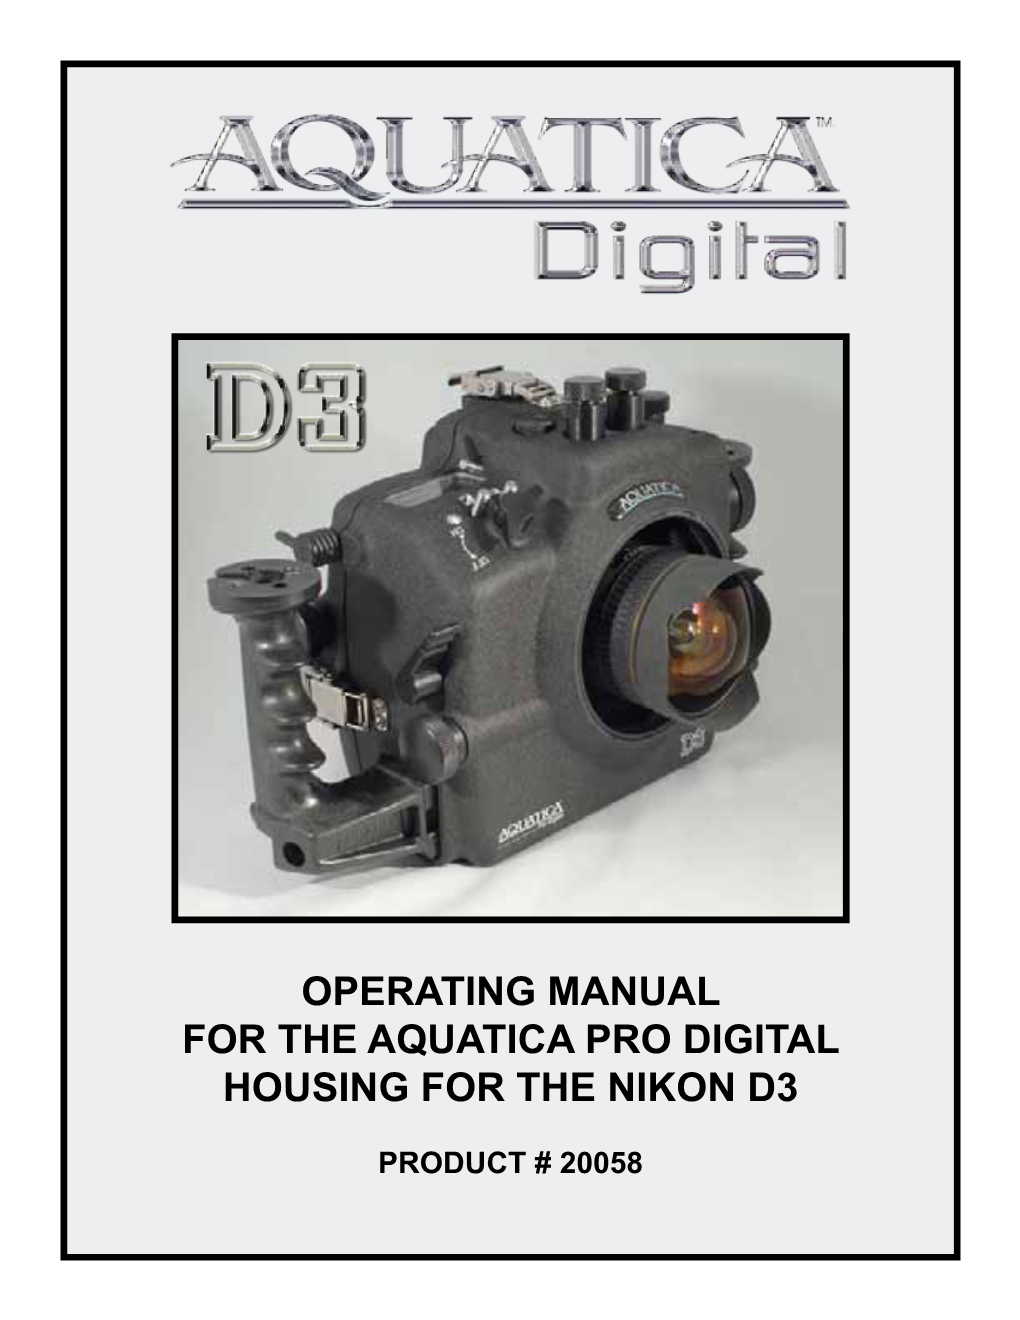 Operating Manual for the Aquatica Pro Digital Housing for the Nikon D3